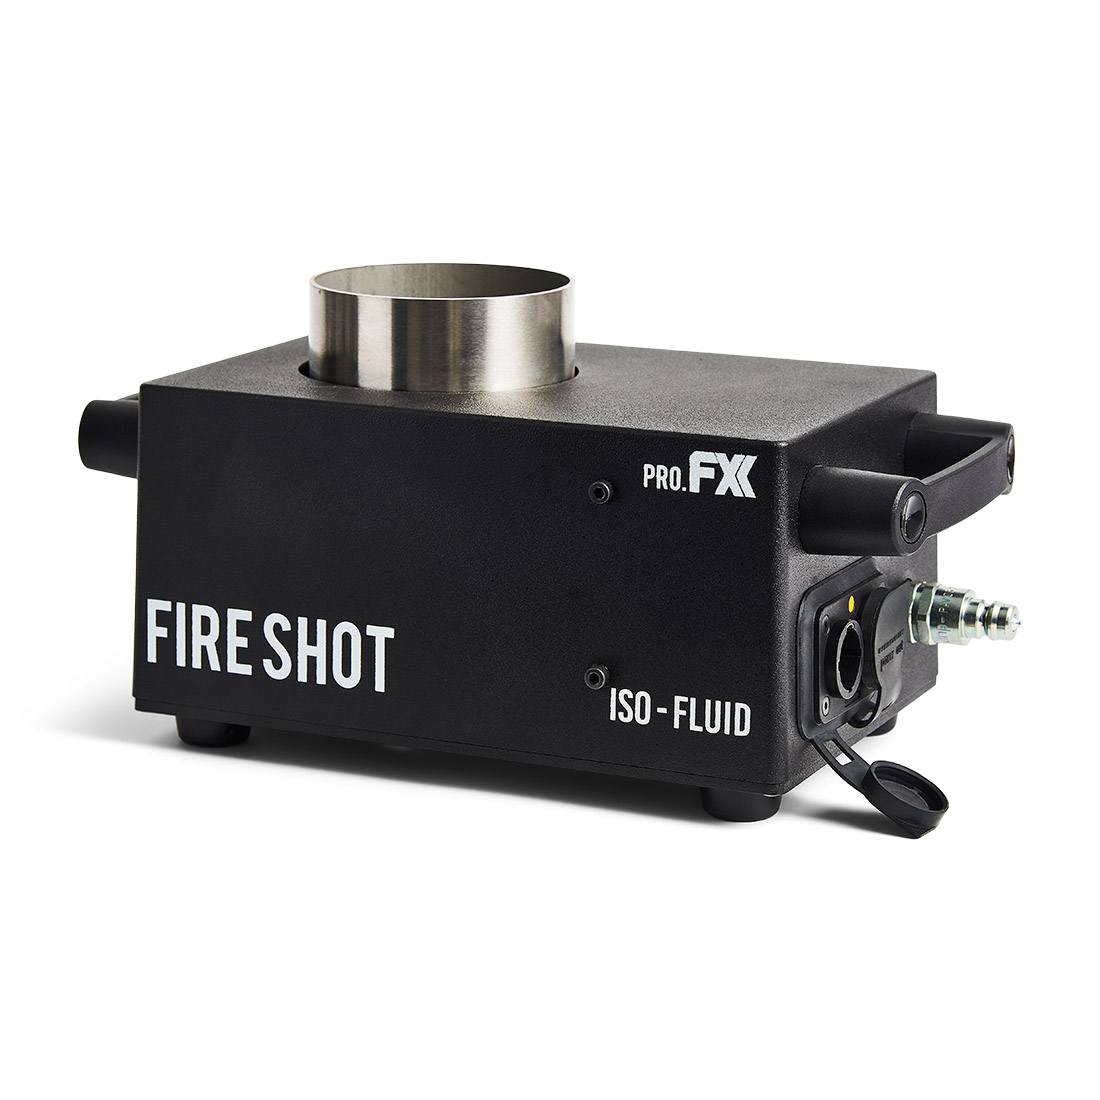 Pro.FX Fireshot Iso-fluid